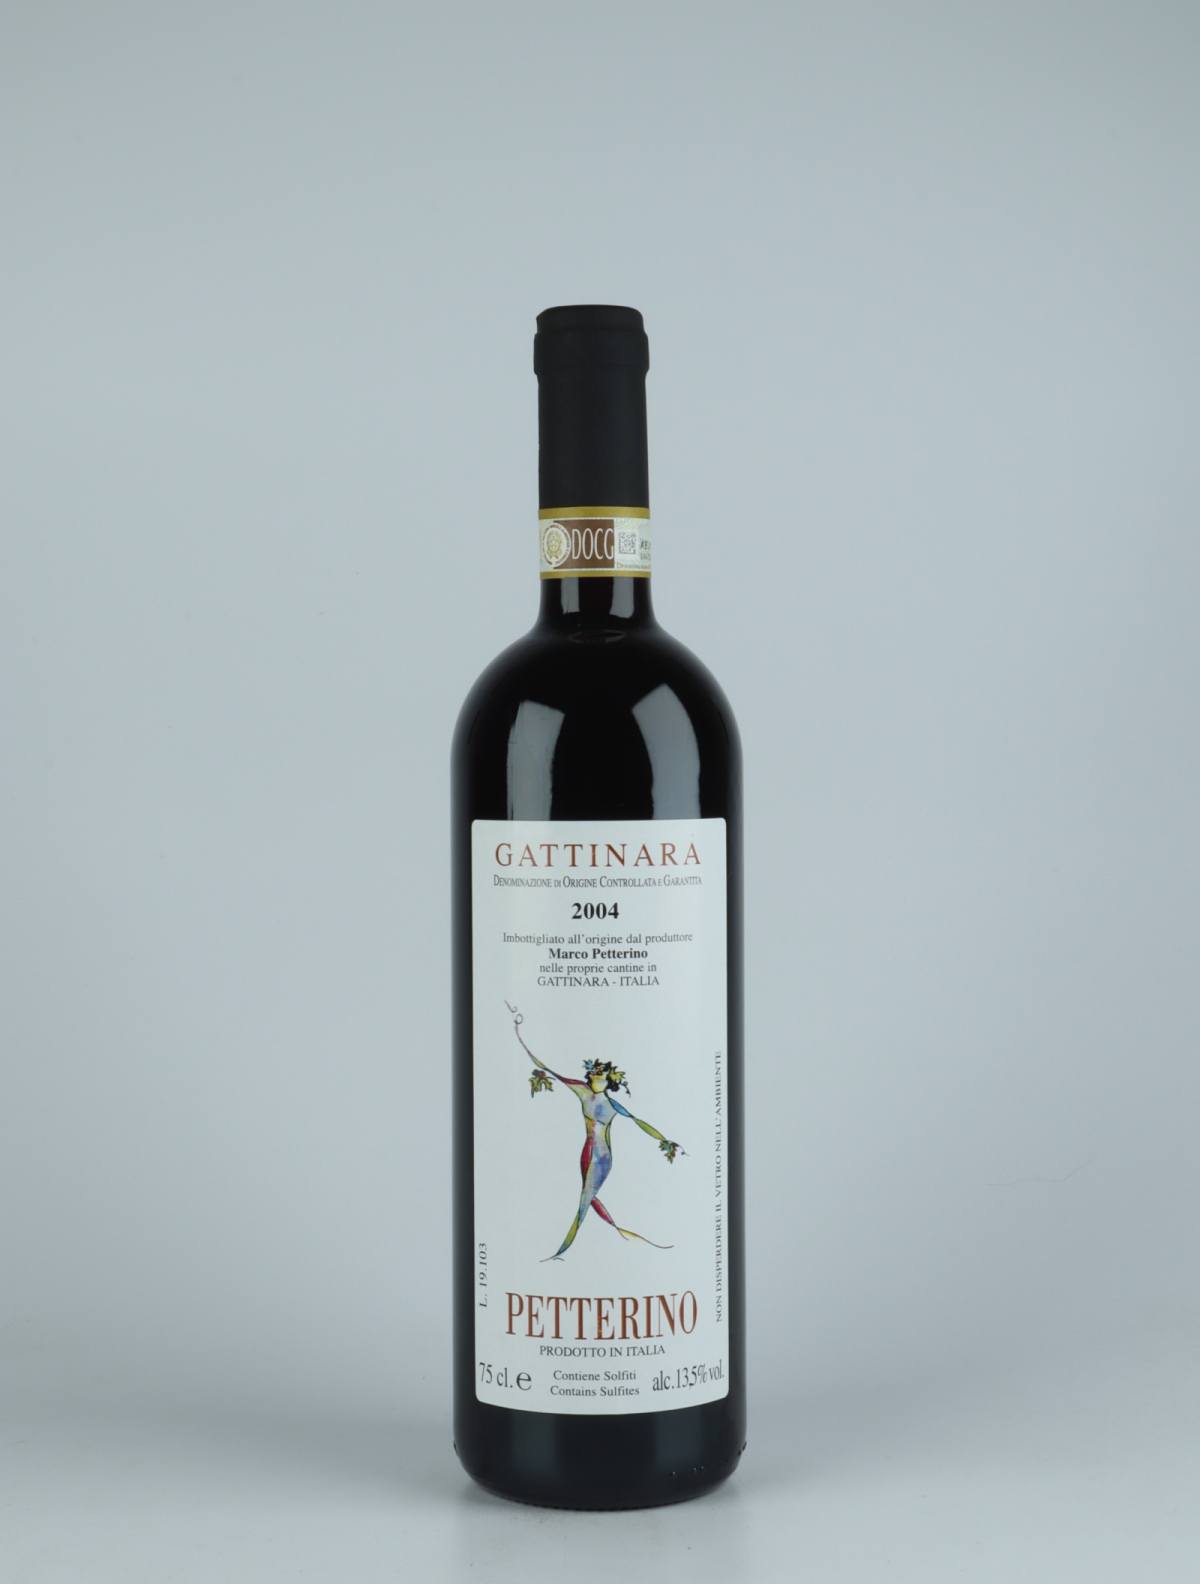 A bottle 2004 Gattinara Red wine from Petterino, Piedmont in Italy